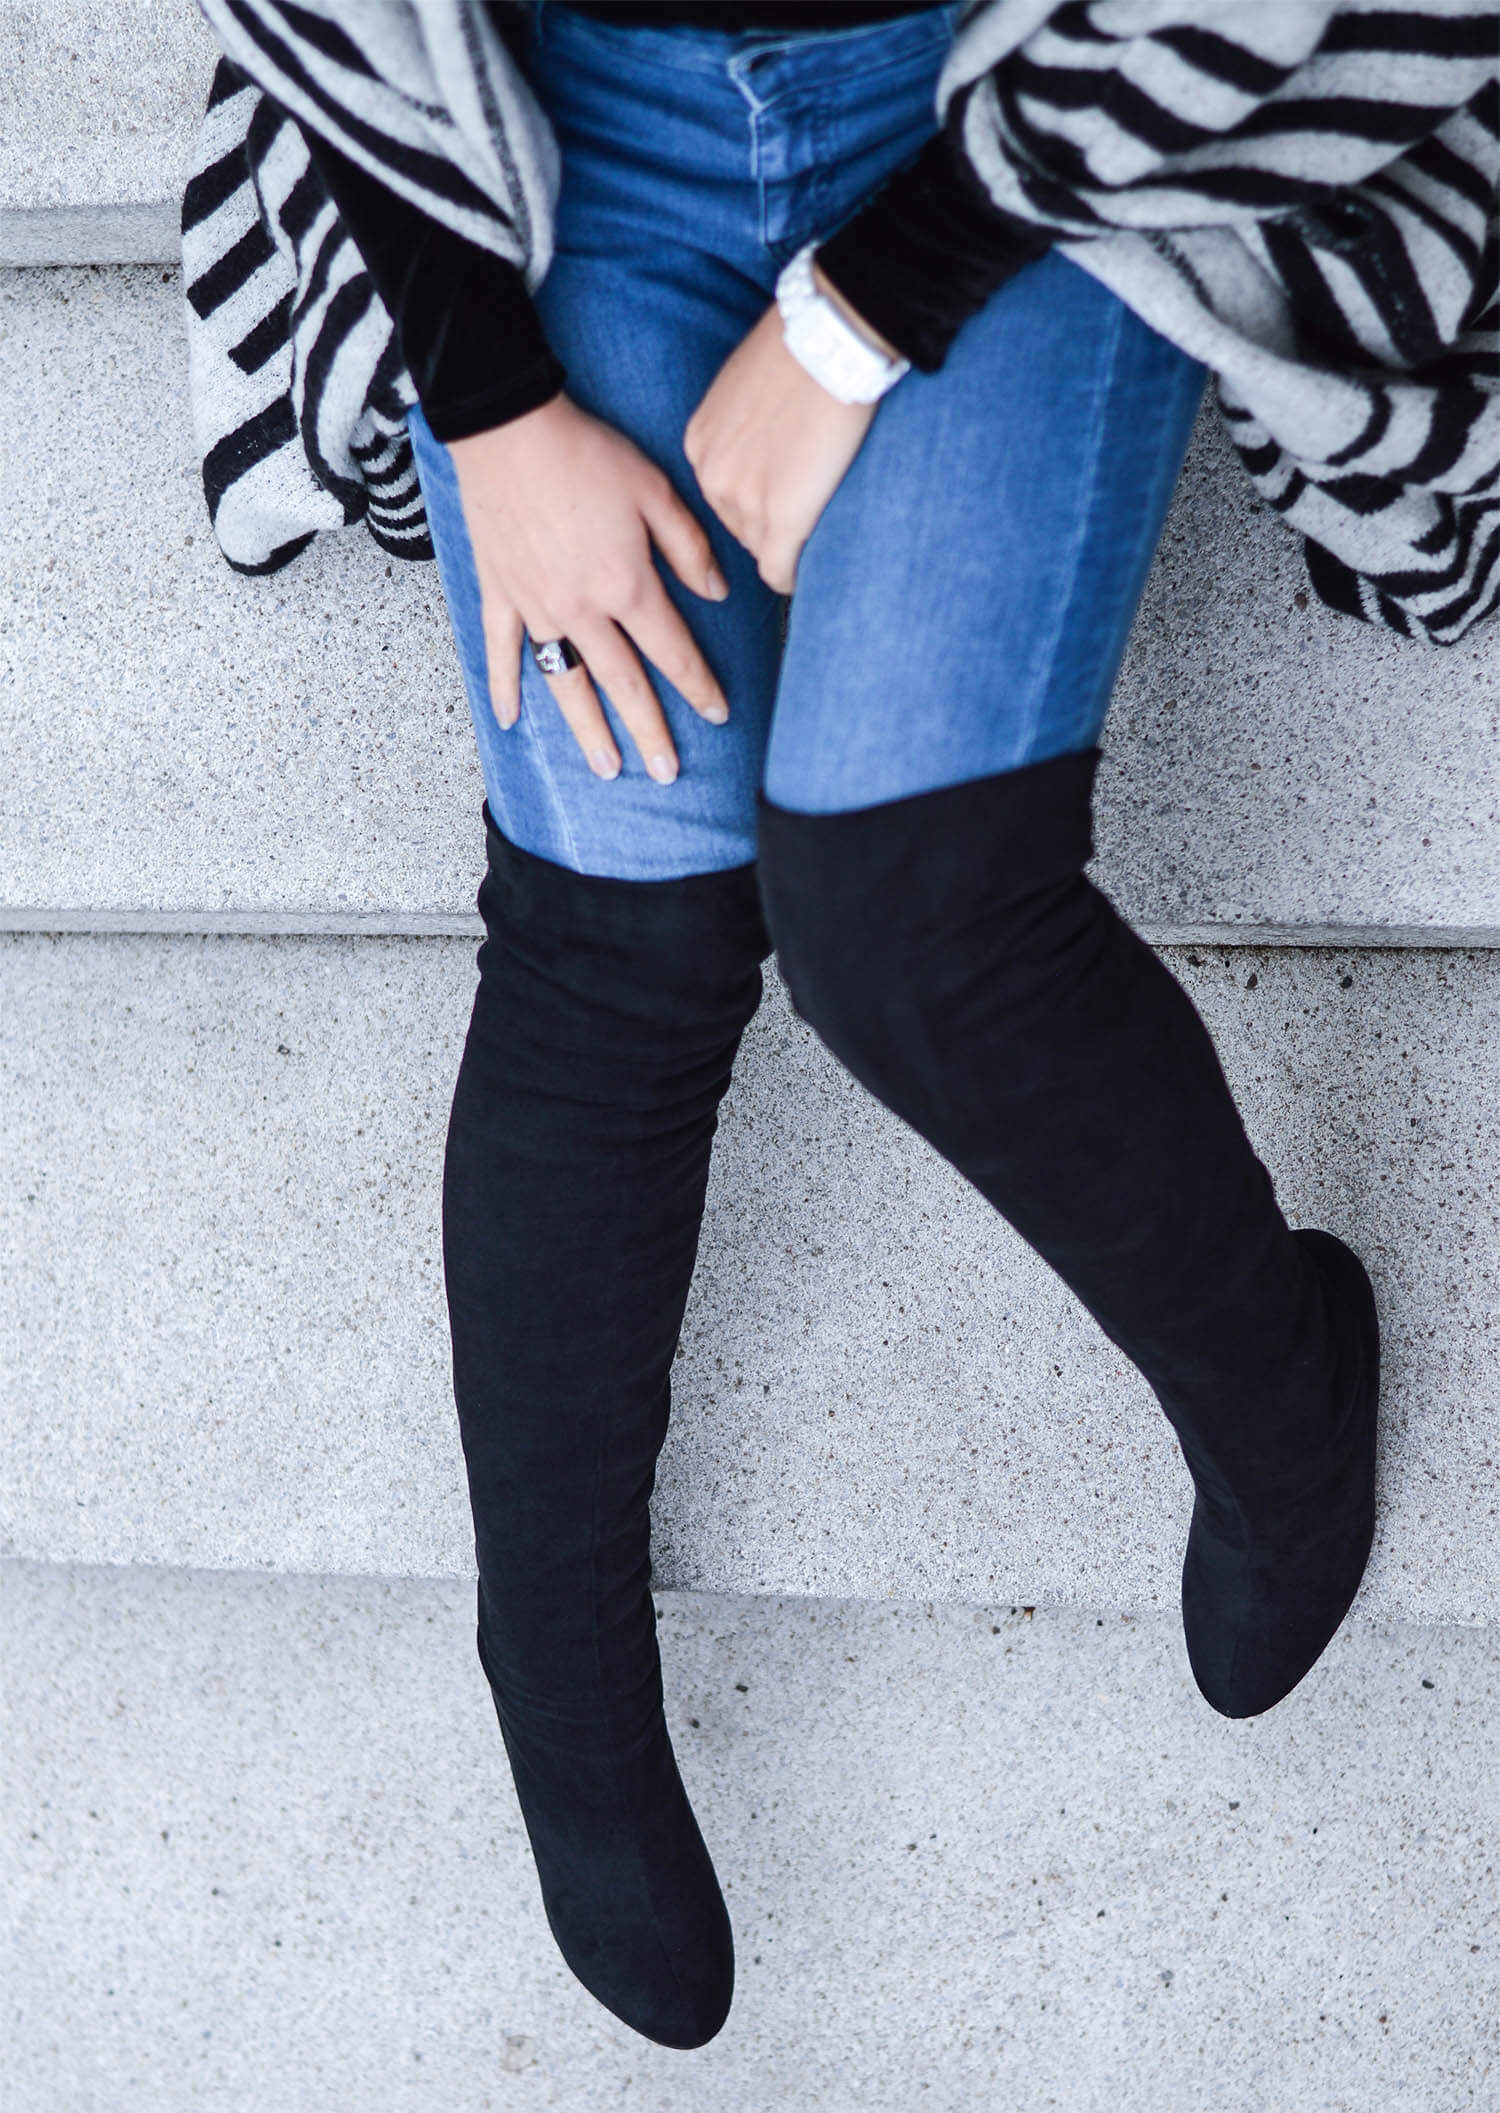 Kationette Fashionblog Outfit: Velvet Bodysuit, Overknees and Zara Cape Streetstyle Curls